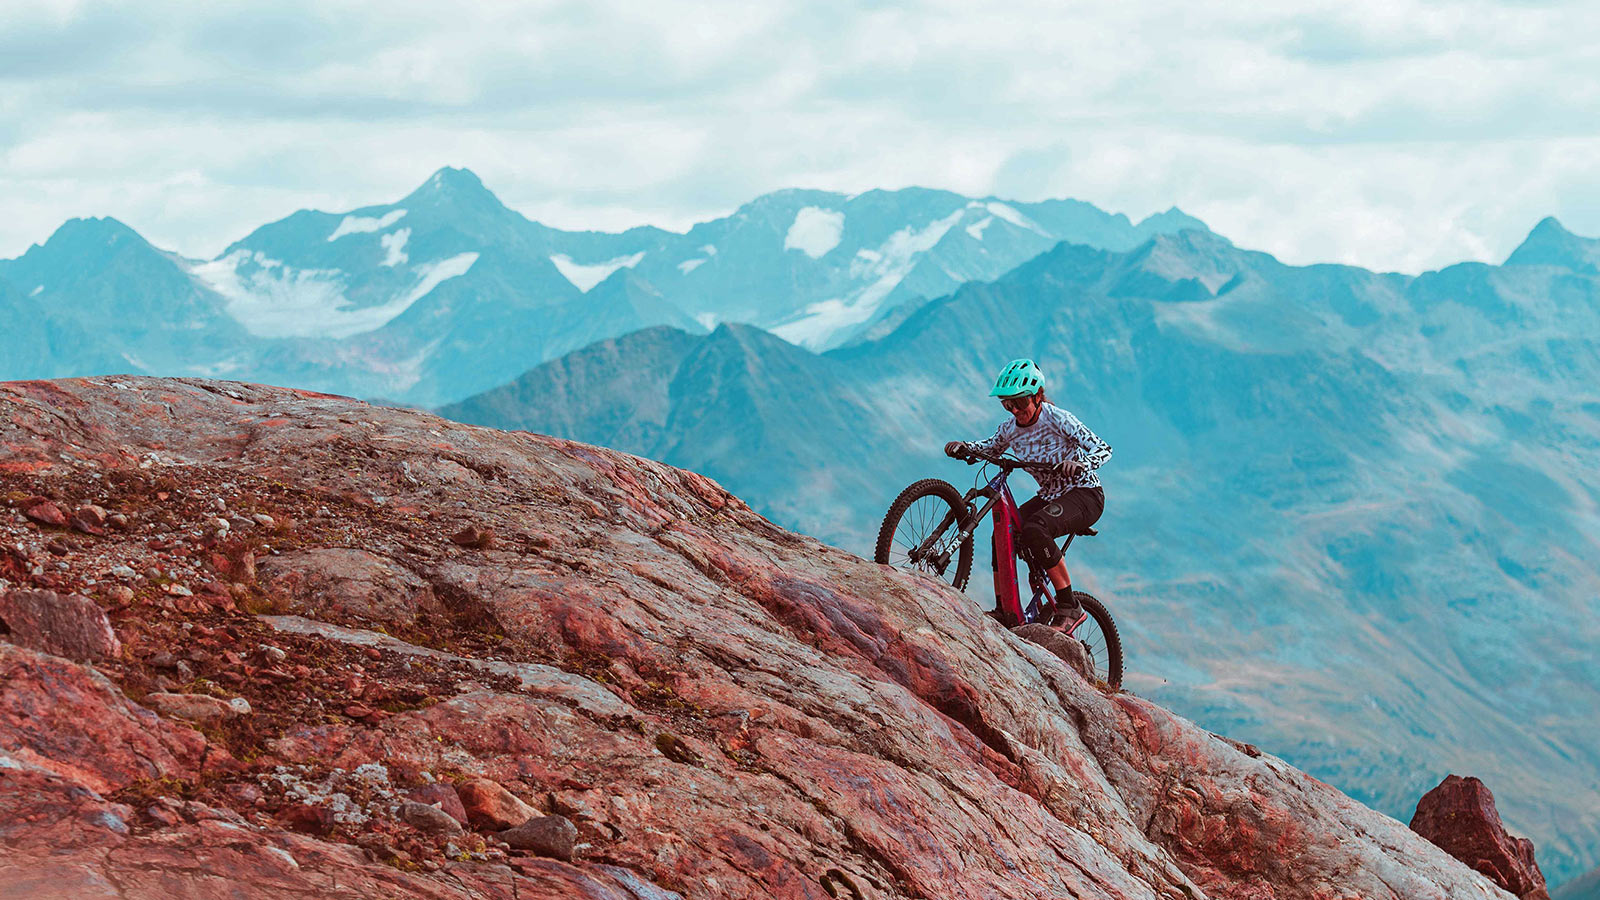 NOX Epium eMTB, lightweight carbon enduro all-mountain ebike made-in-Europe, climb